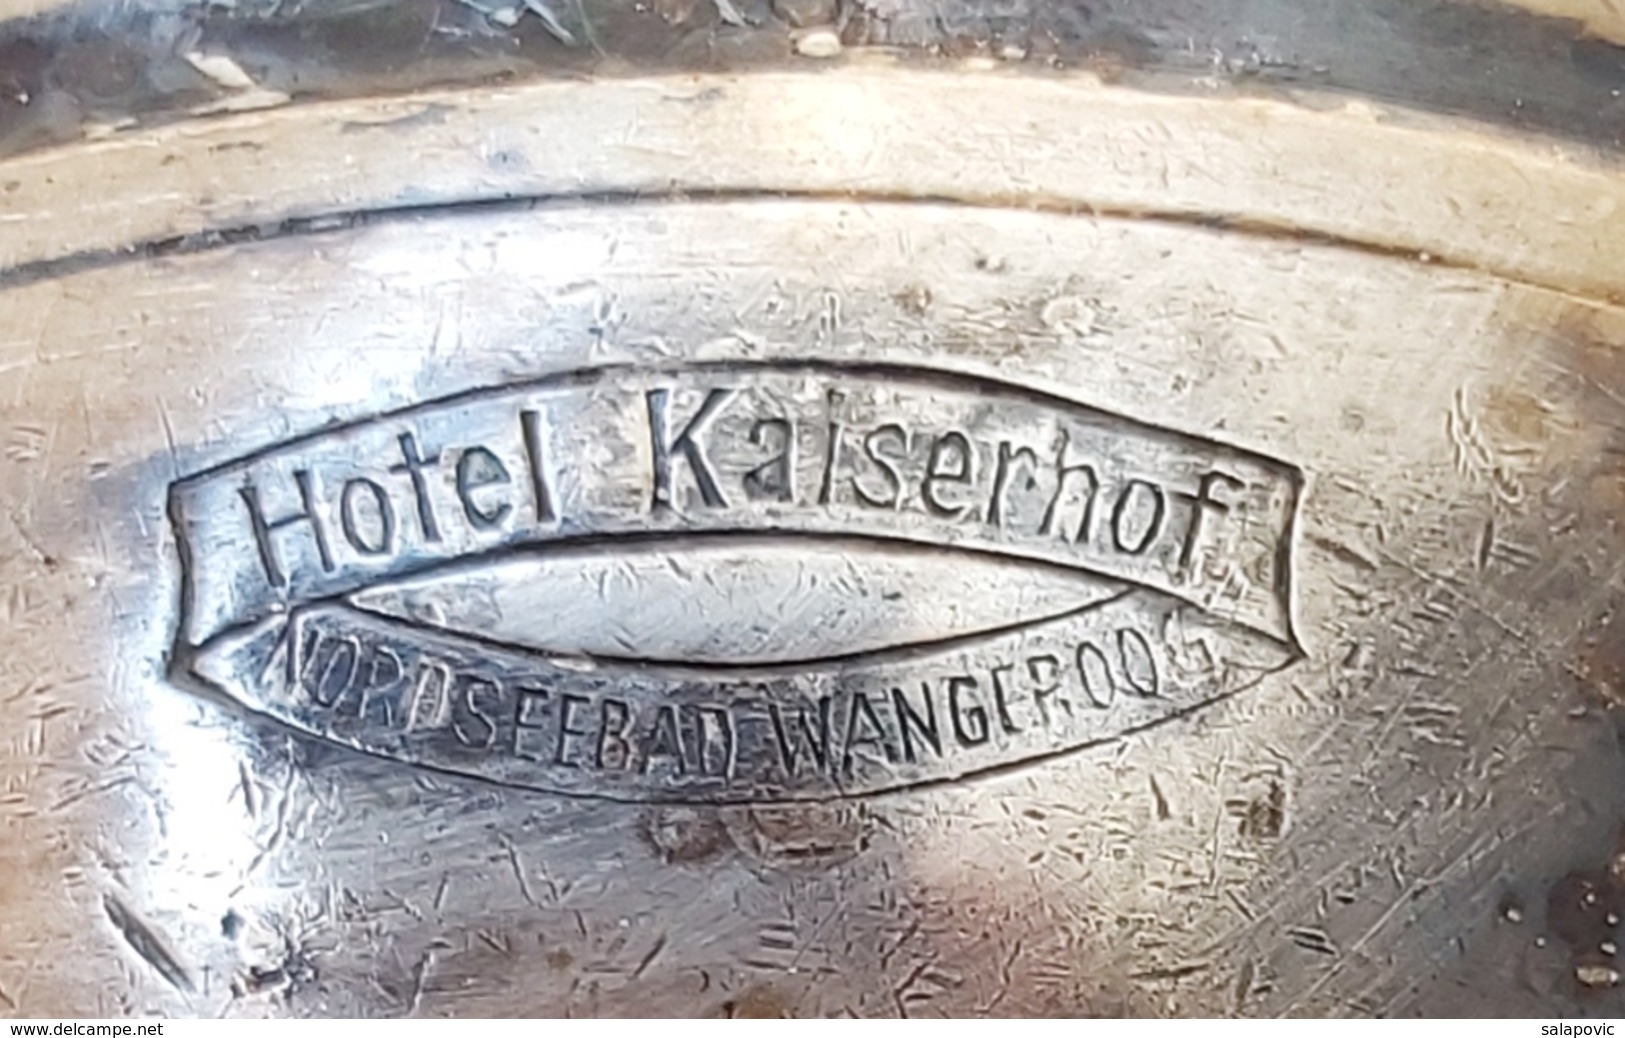 Old Cup Wine Glass Hotel Kaiserhof, Nord Seebad Wangeroog - Kopjes